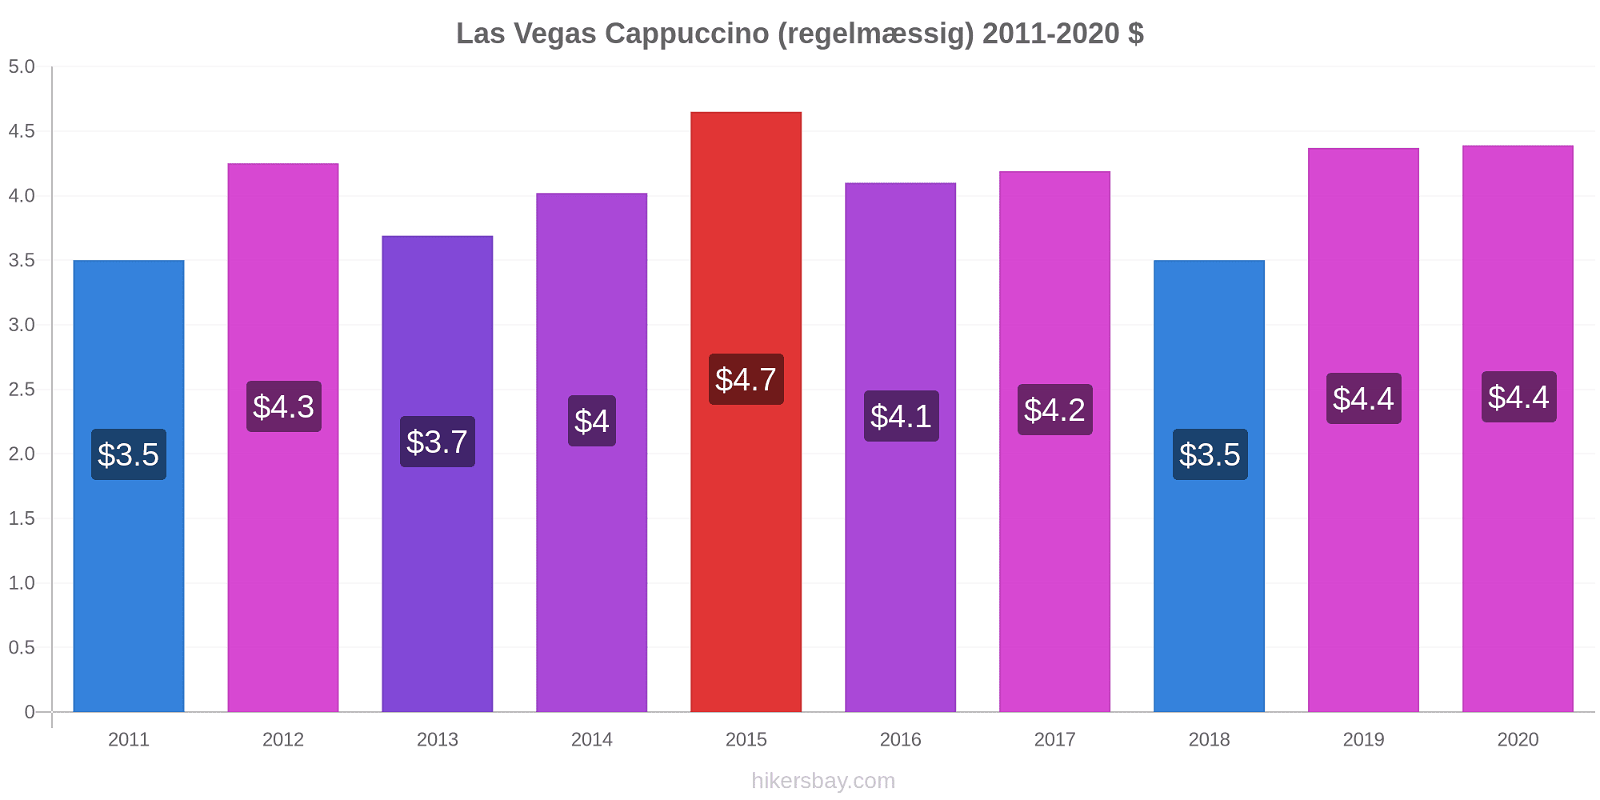 Las Vegas prisændringer Cappuccino (regelmæssig) hikersbay.com